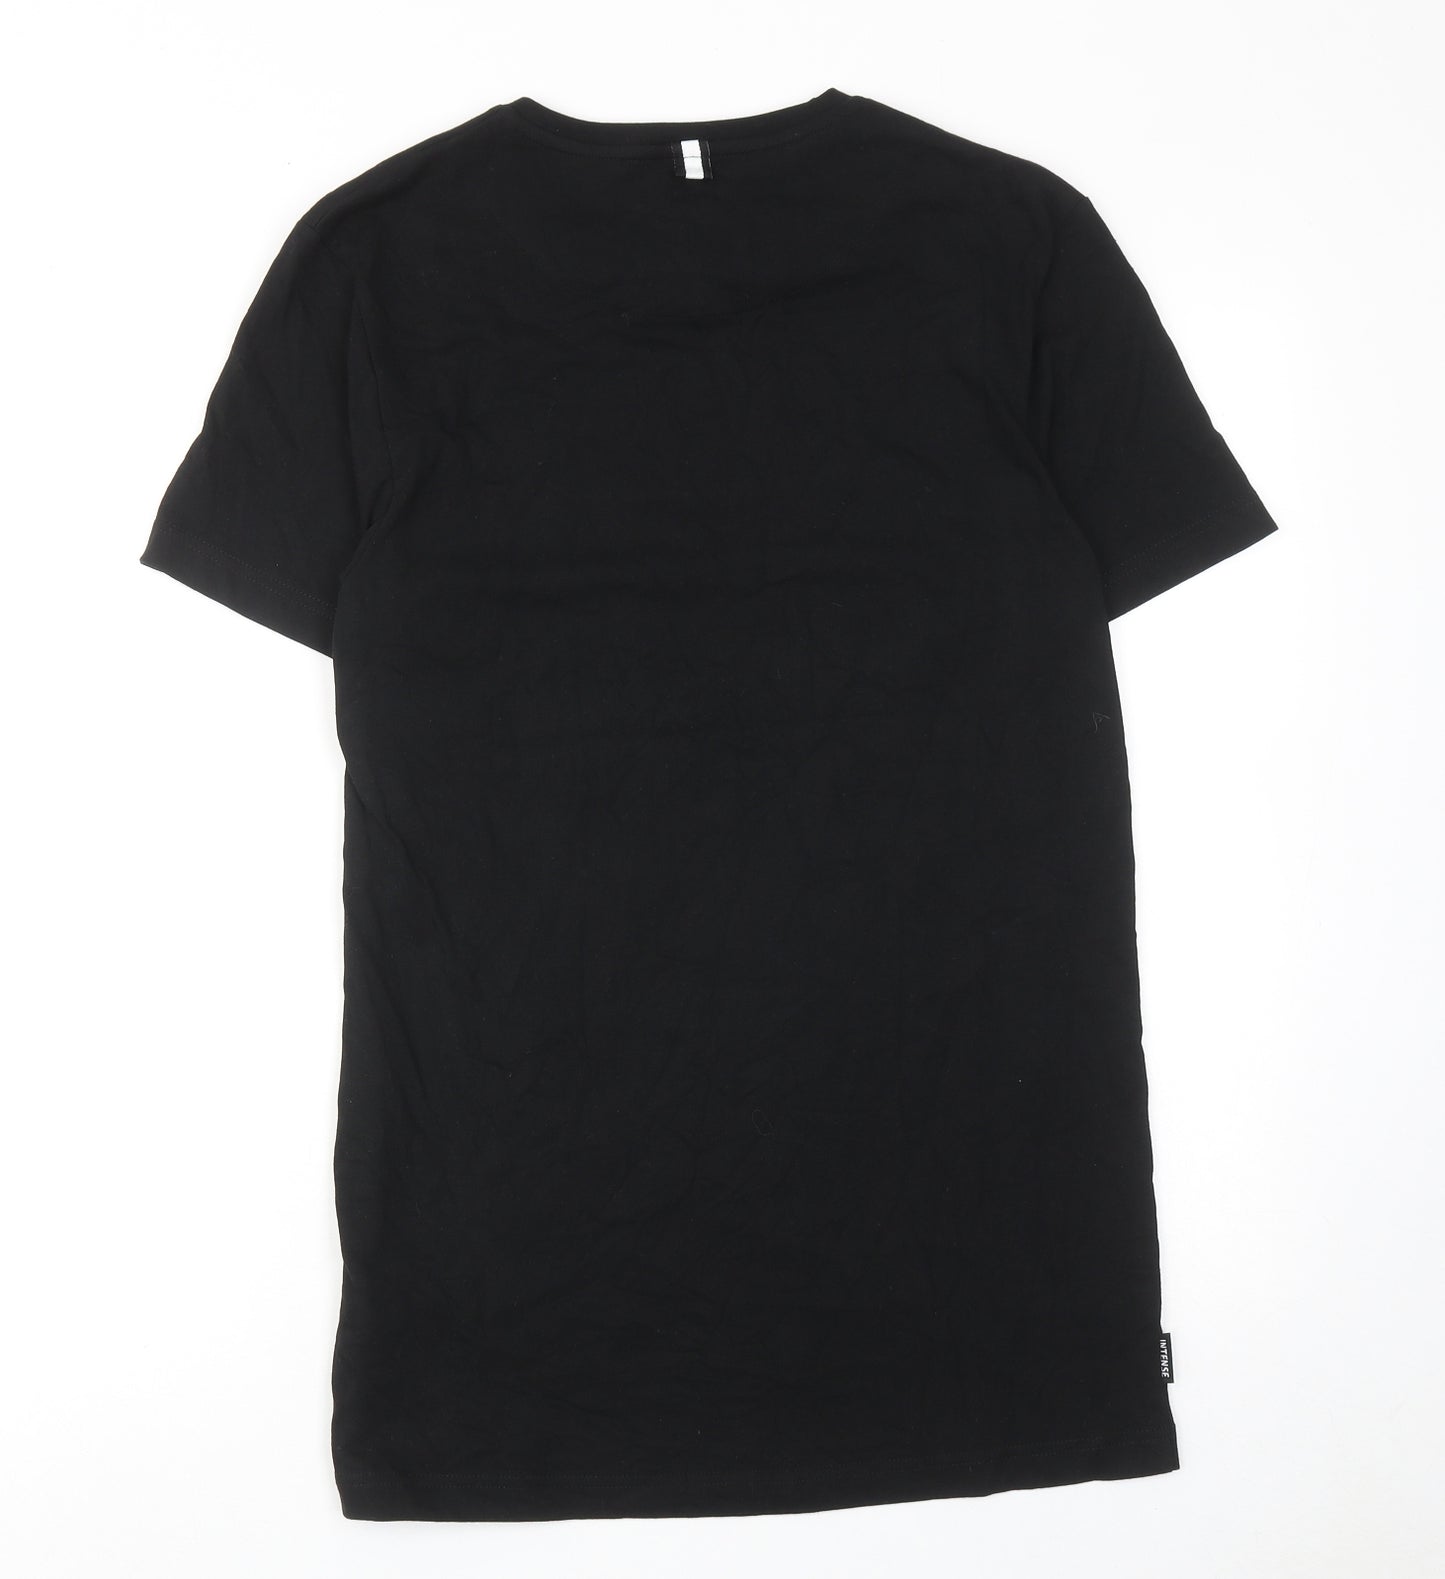 Intense Mens Black Cotton T-Shirt Size M Round Neck